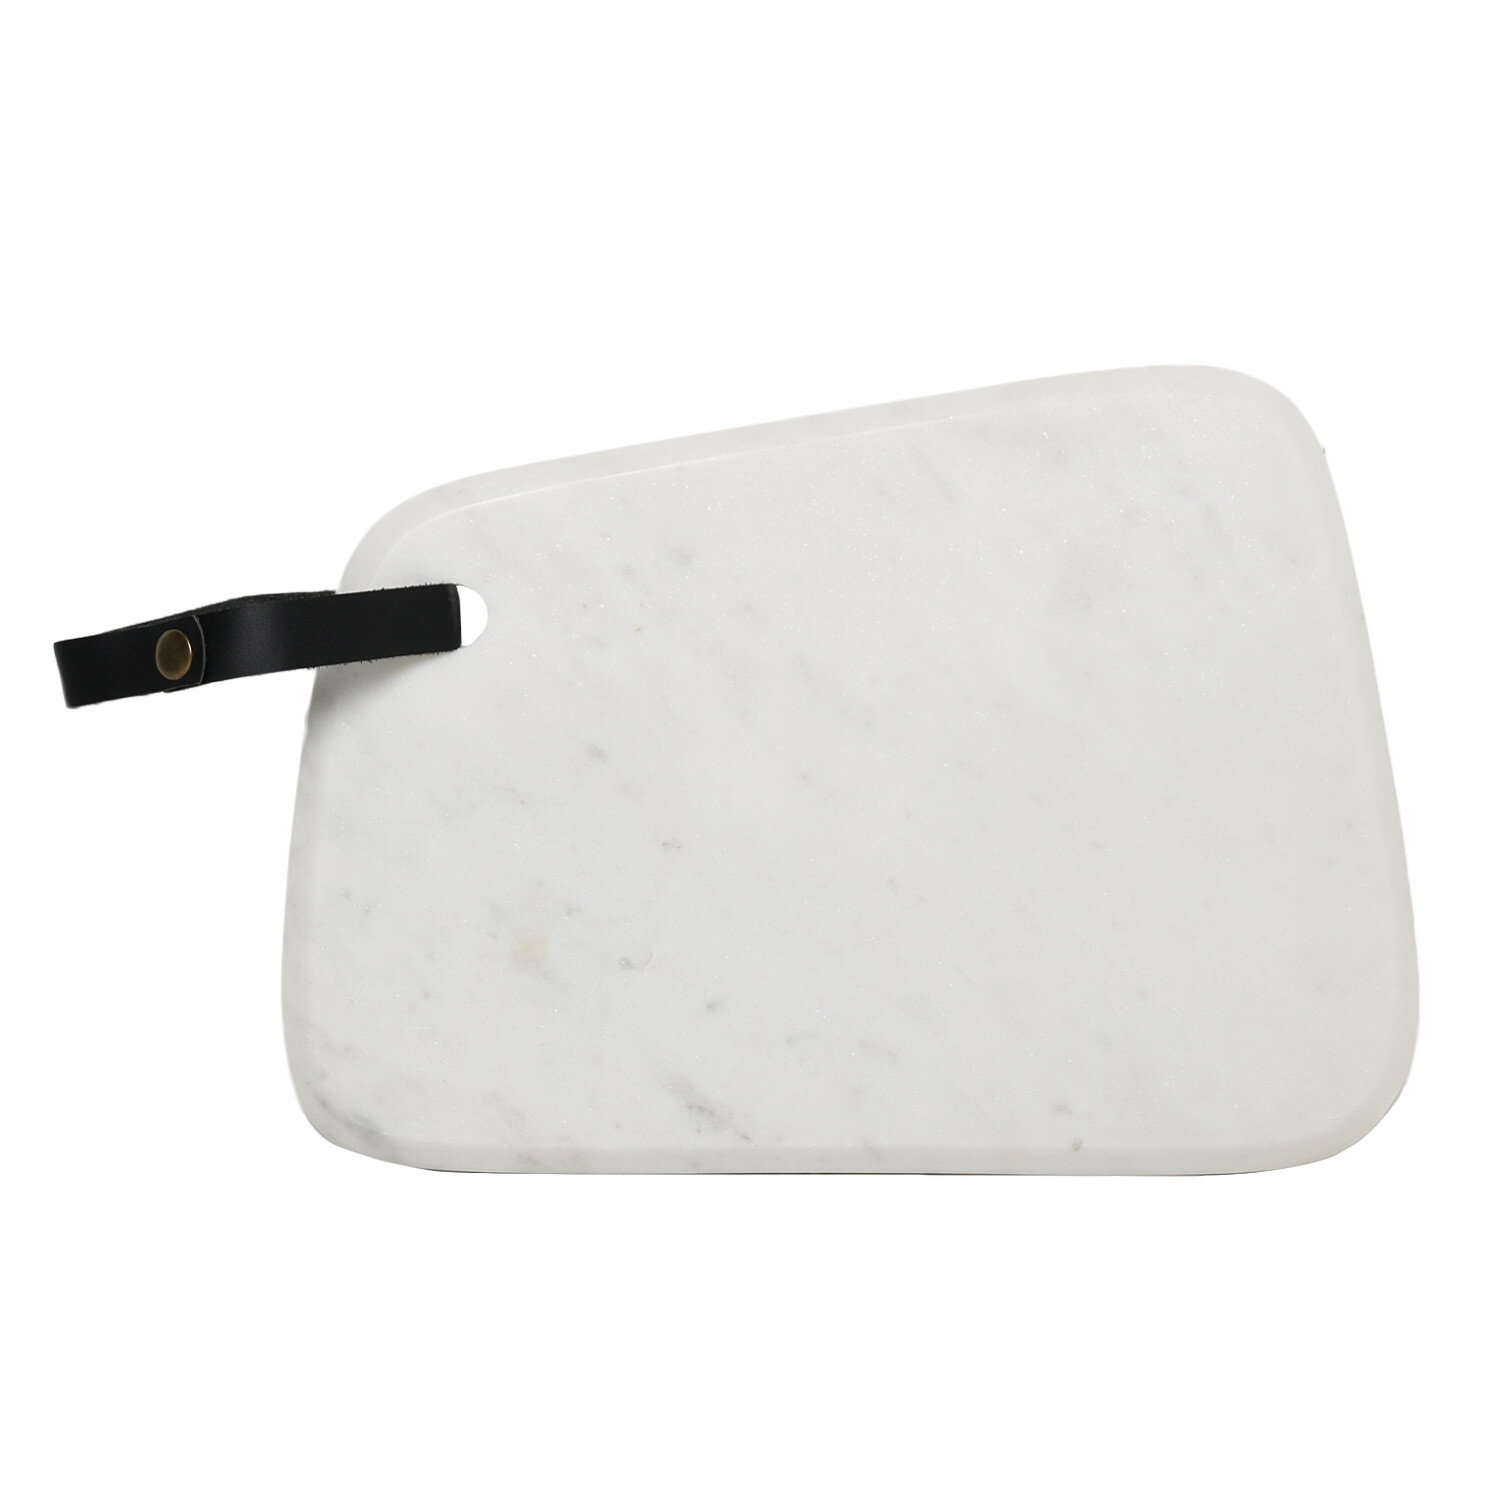 Marble Irregular Serving Board - White Image